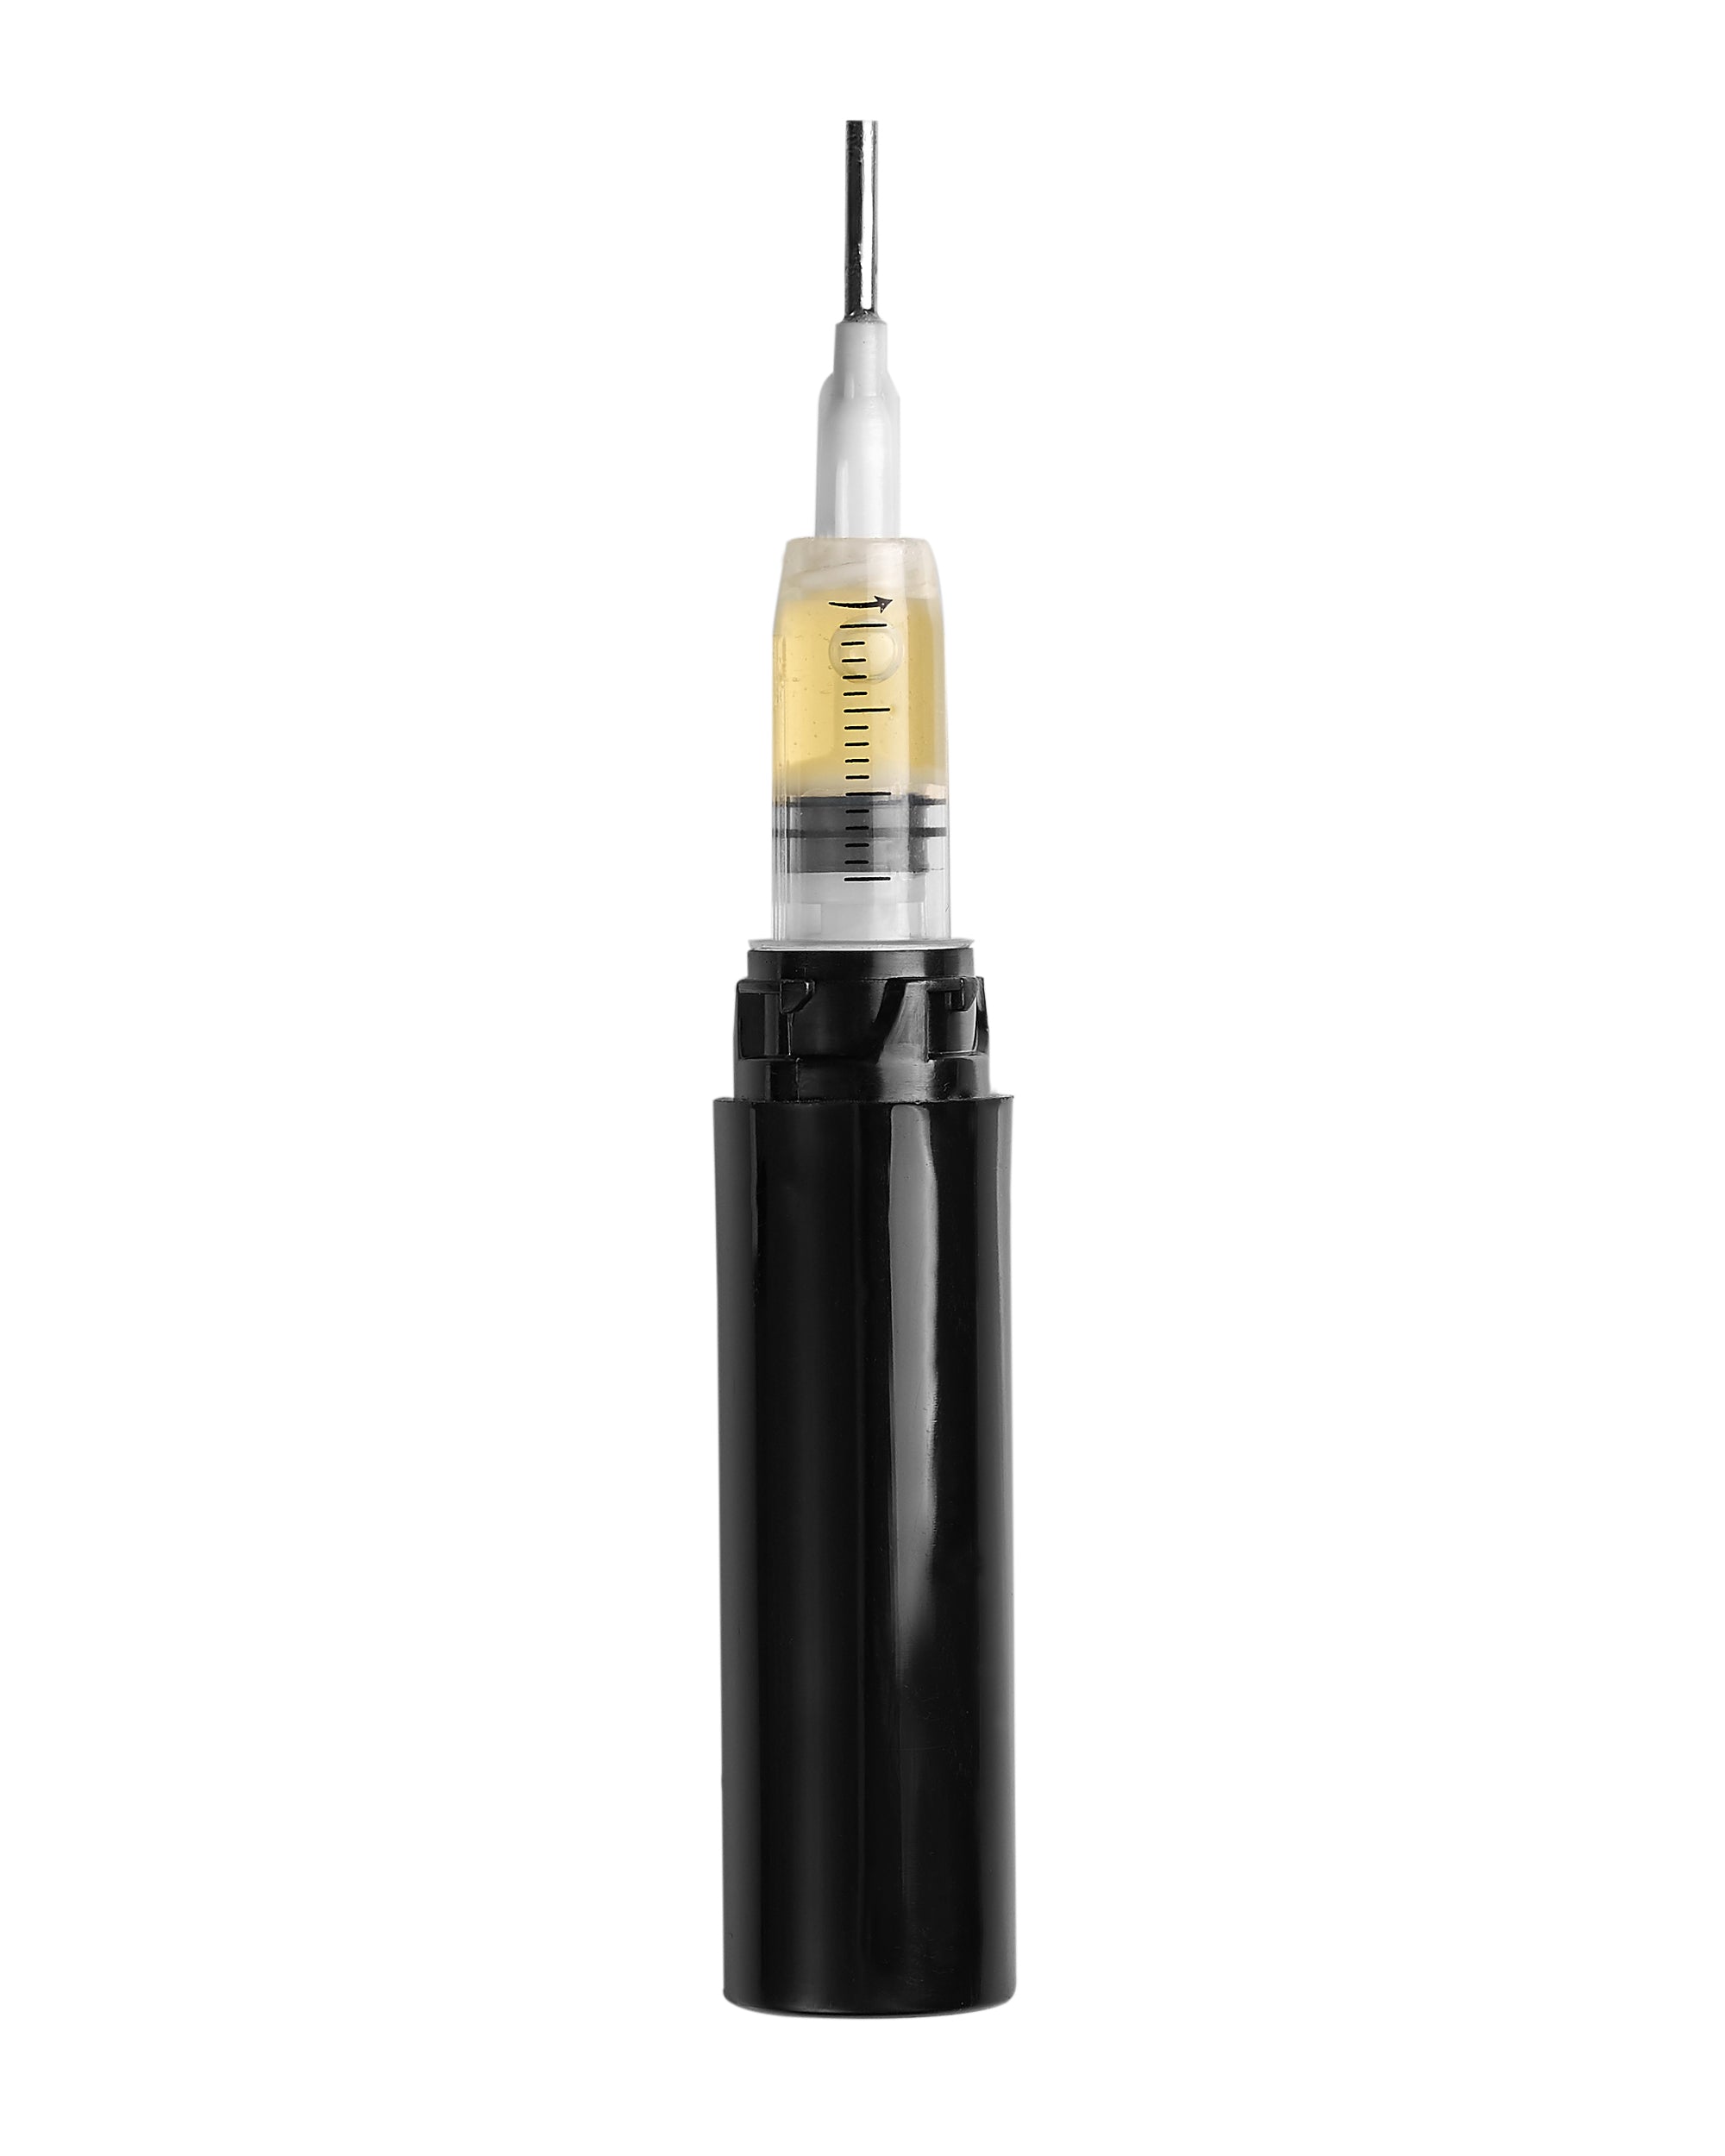 Child Resistant & Luer Lock | DymaPak Twistspenser Black Plastic Dab Applicator Syringes | 1mL - 0.33mL Increments - 2